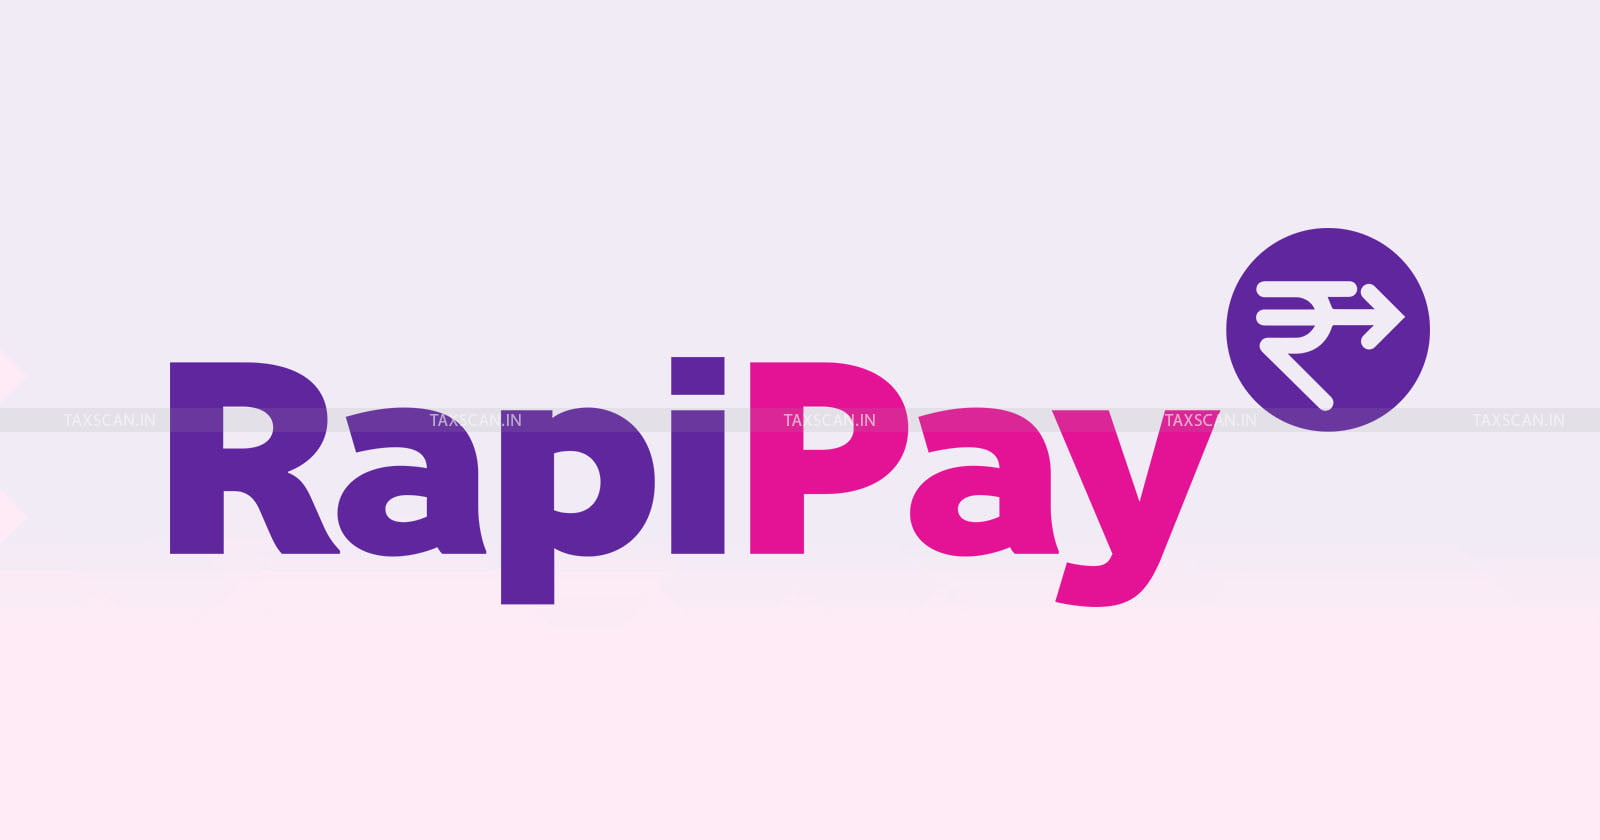 Income - Software - Depreciation - Claim - ITAT - Rapipay - TAXSCAN